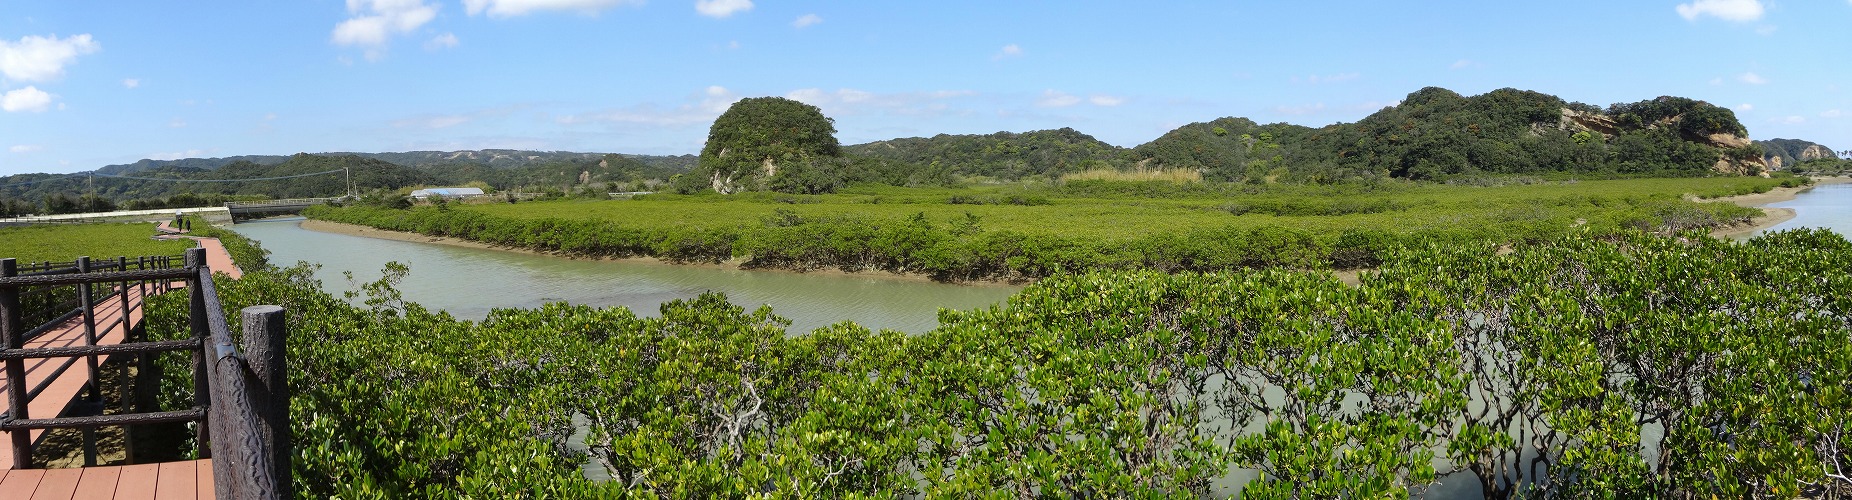 mangrove-park2018-3-11.jpg(488774 byte)